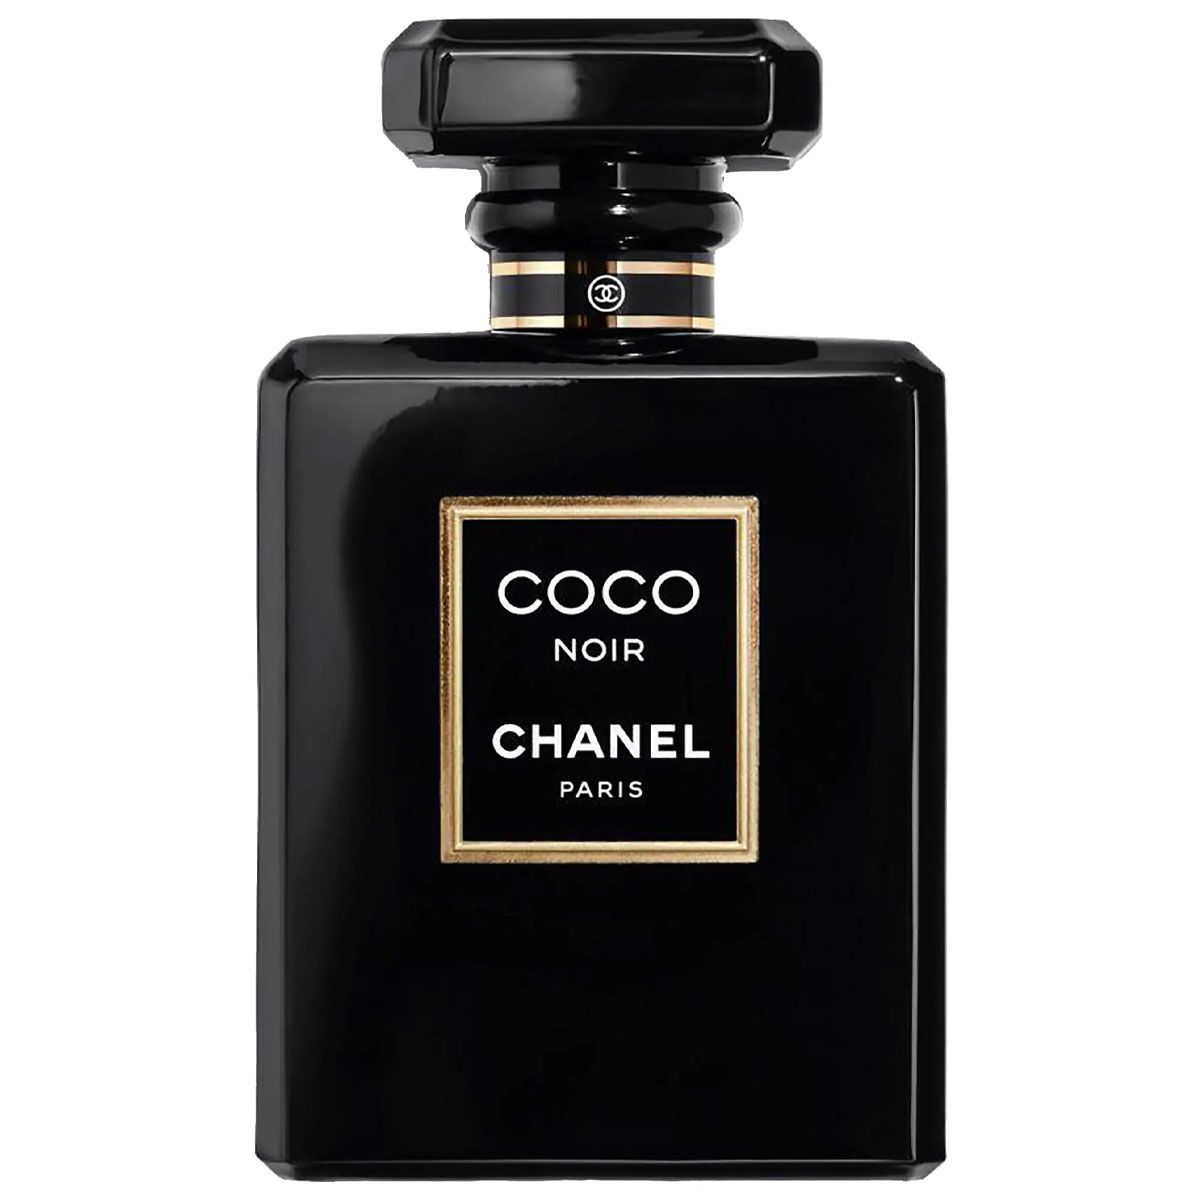 Nước hoa Chanel coco noir eau de parfum 100ml  coco đen   Phanphoimyphamgiasicom